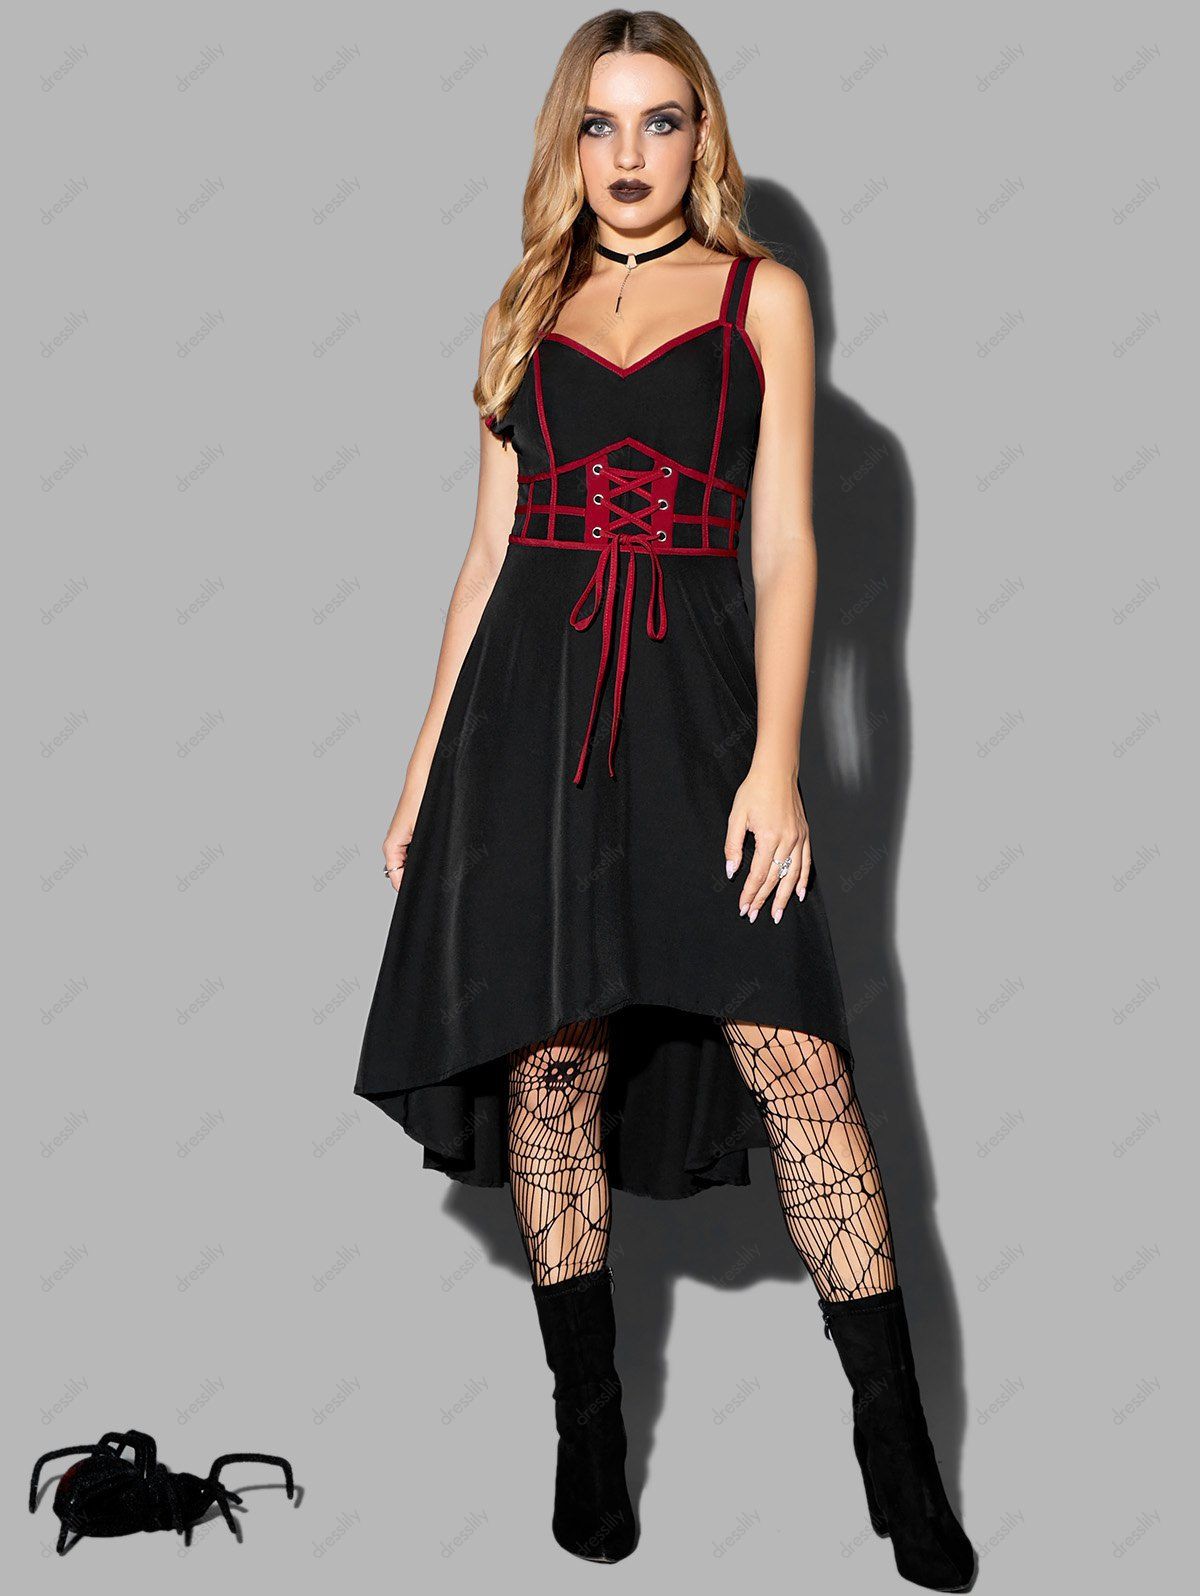 Gothic Dress Contrast Pipe Lace Up Empire Waist V Neck Sleeveless High Low Midi Casual Dress - BLACK XXXL